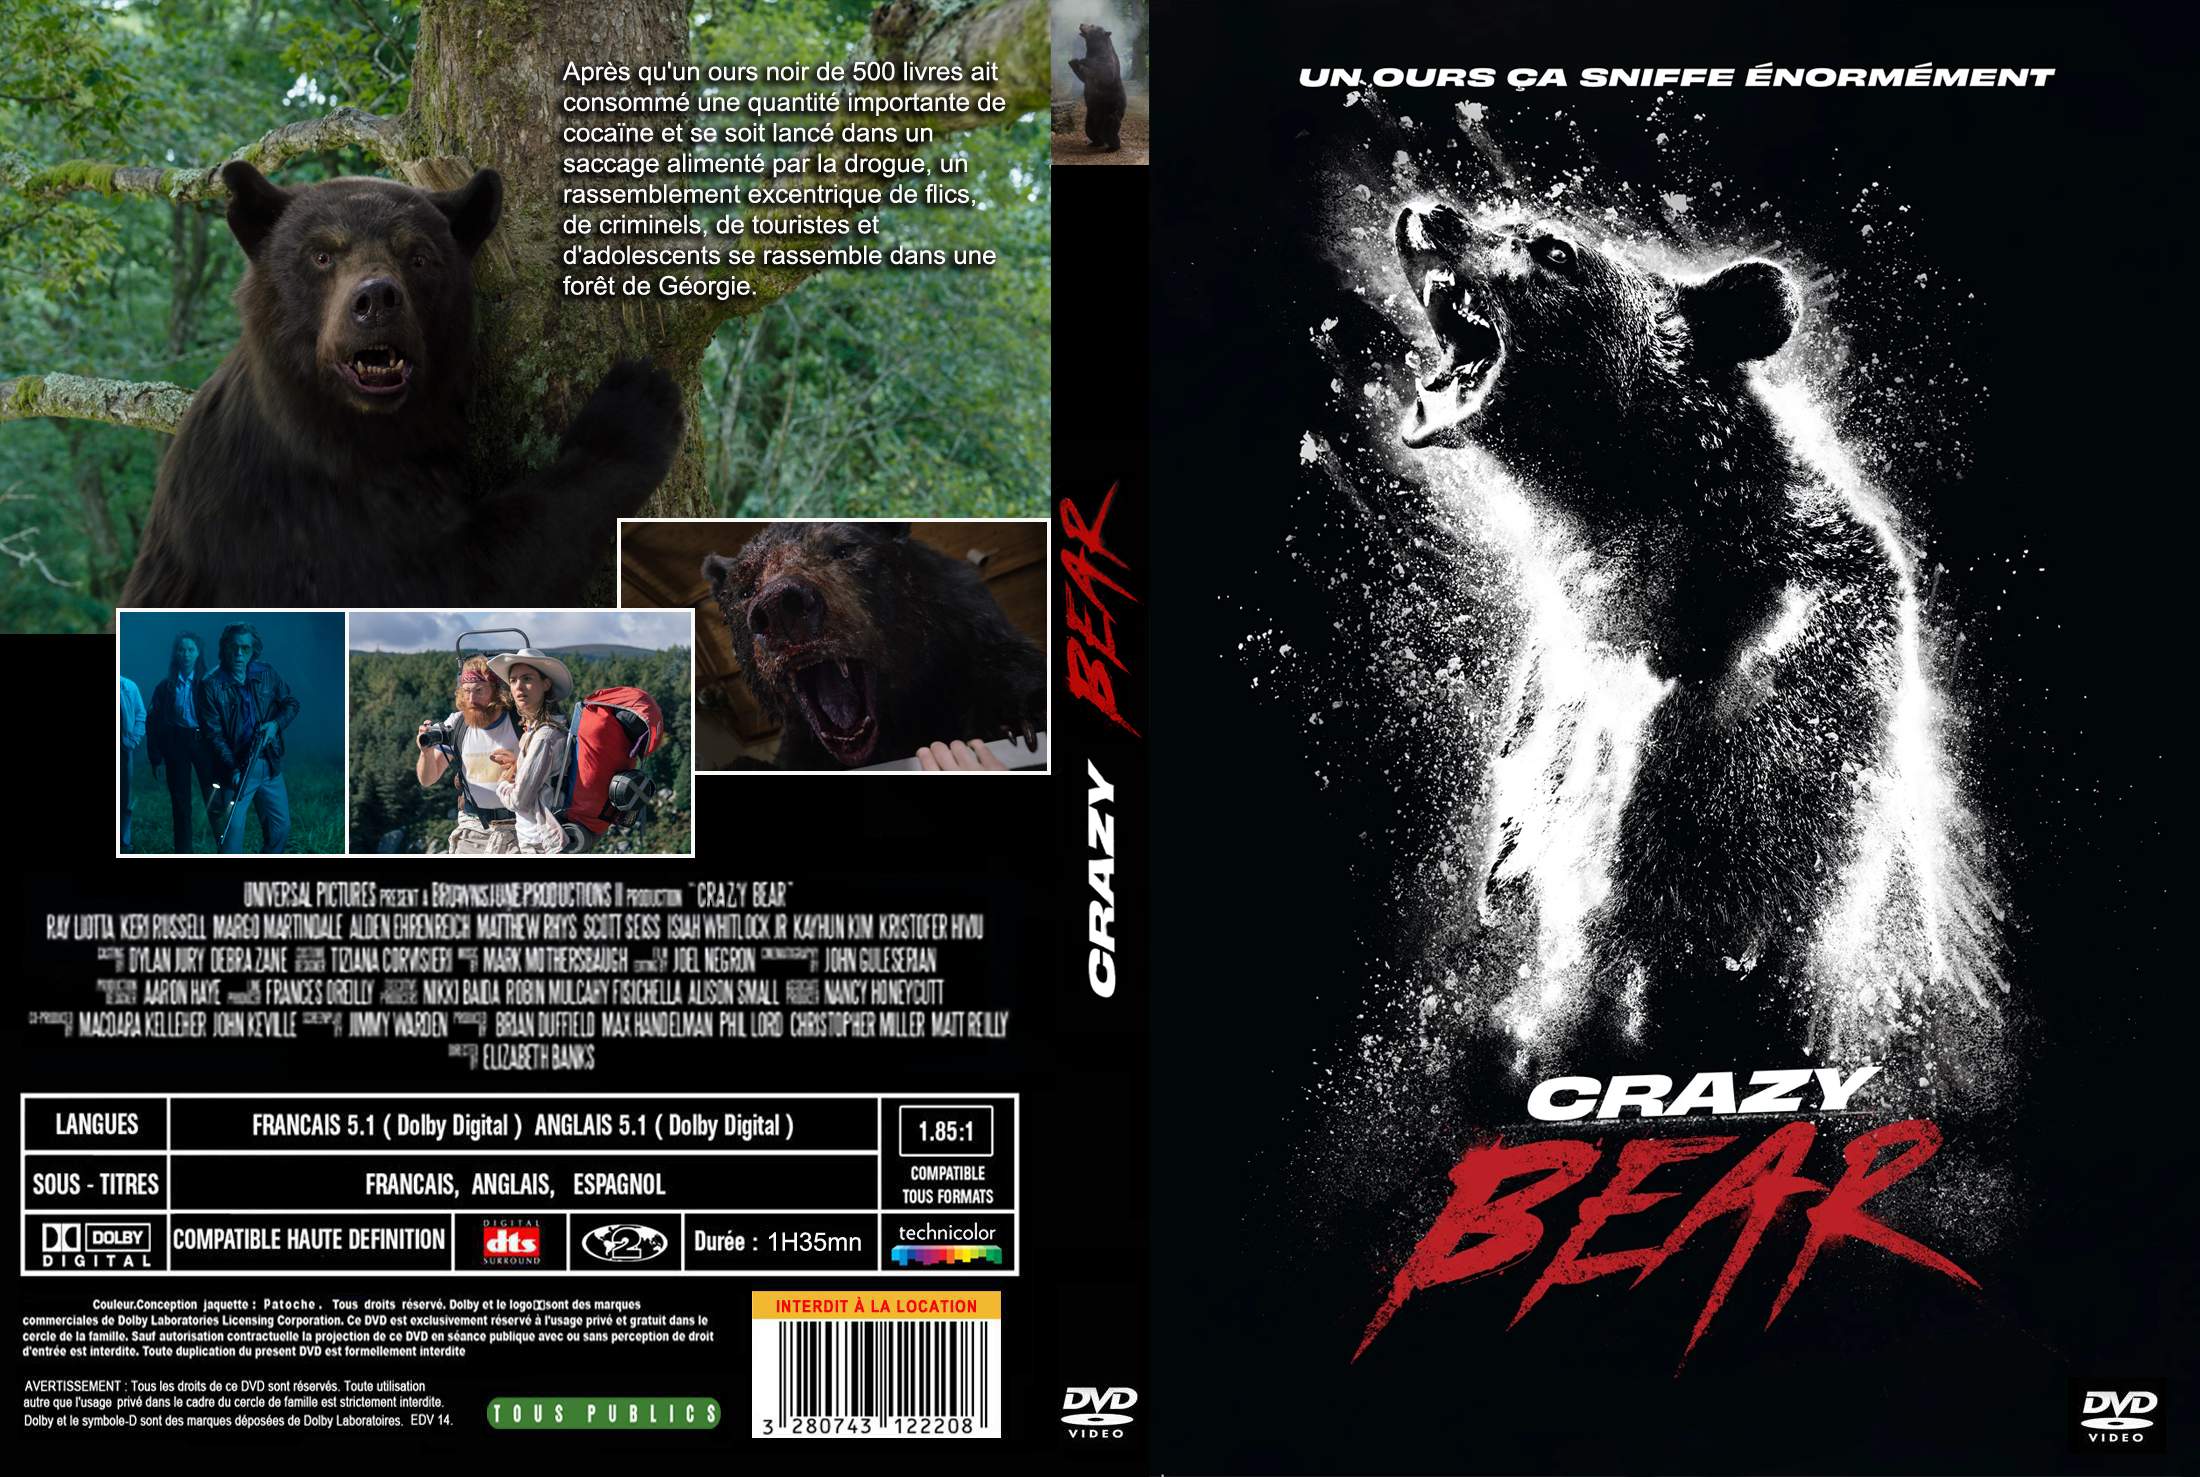 Jaquette DVD Crazy bear custom